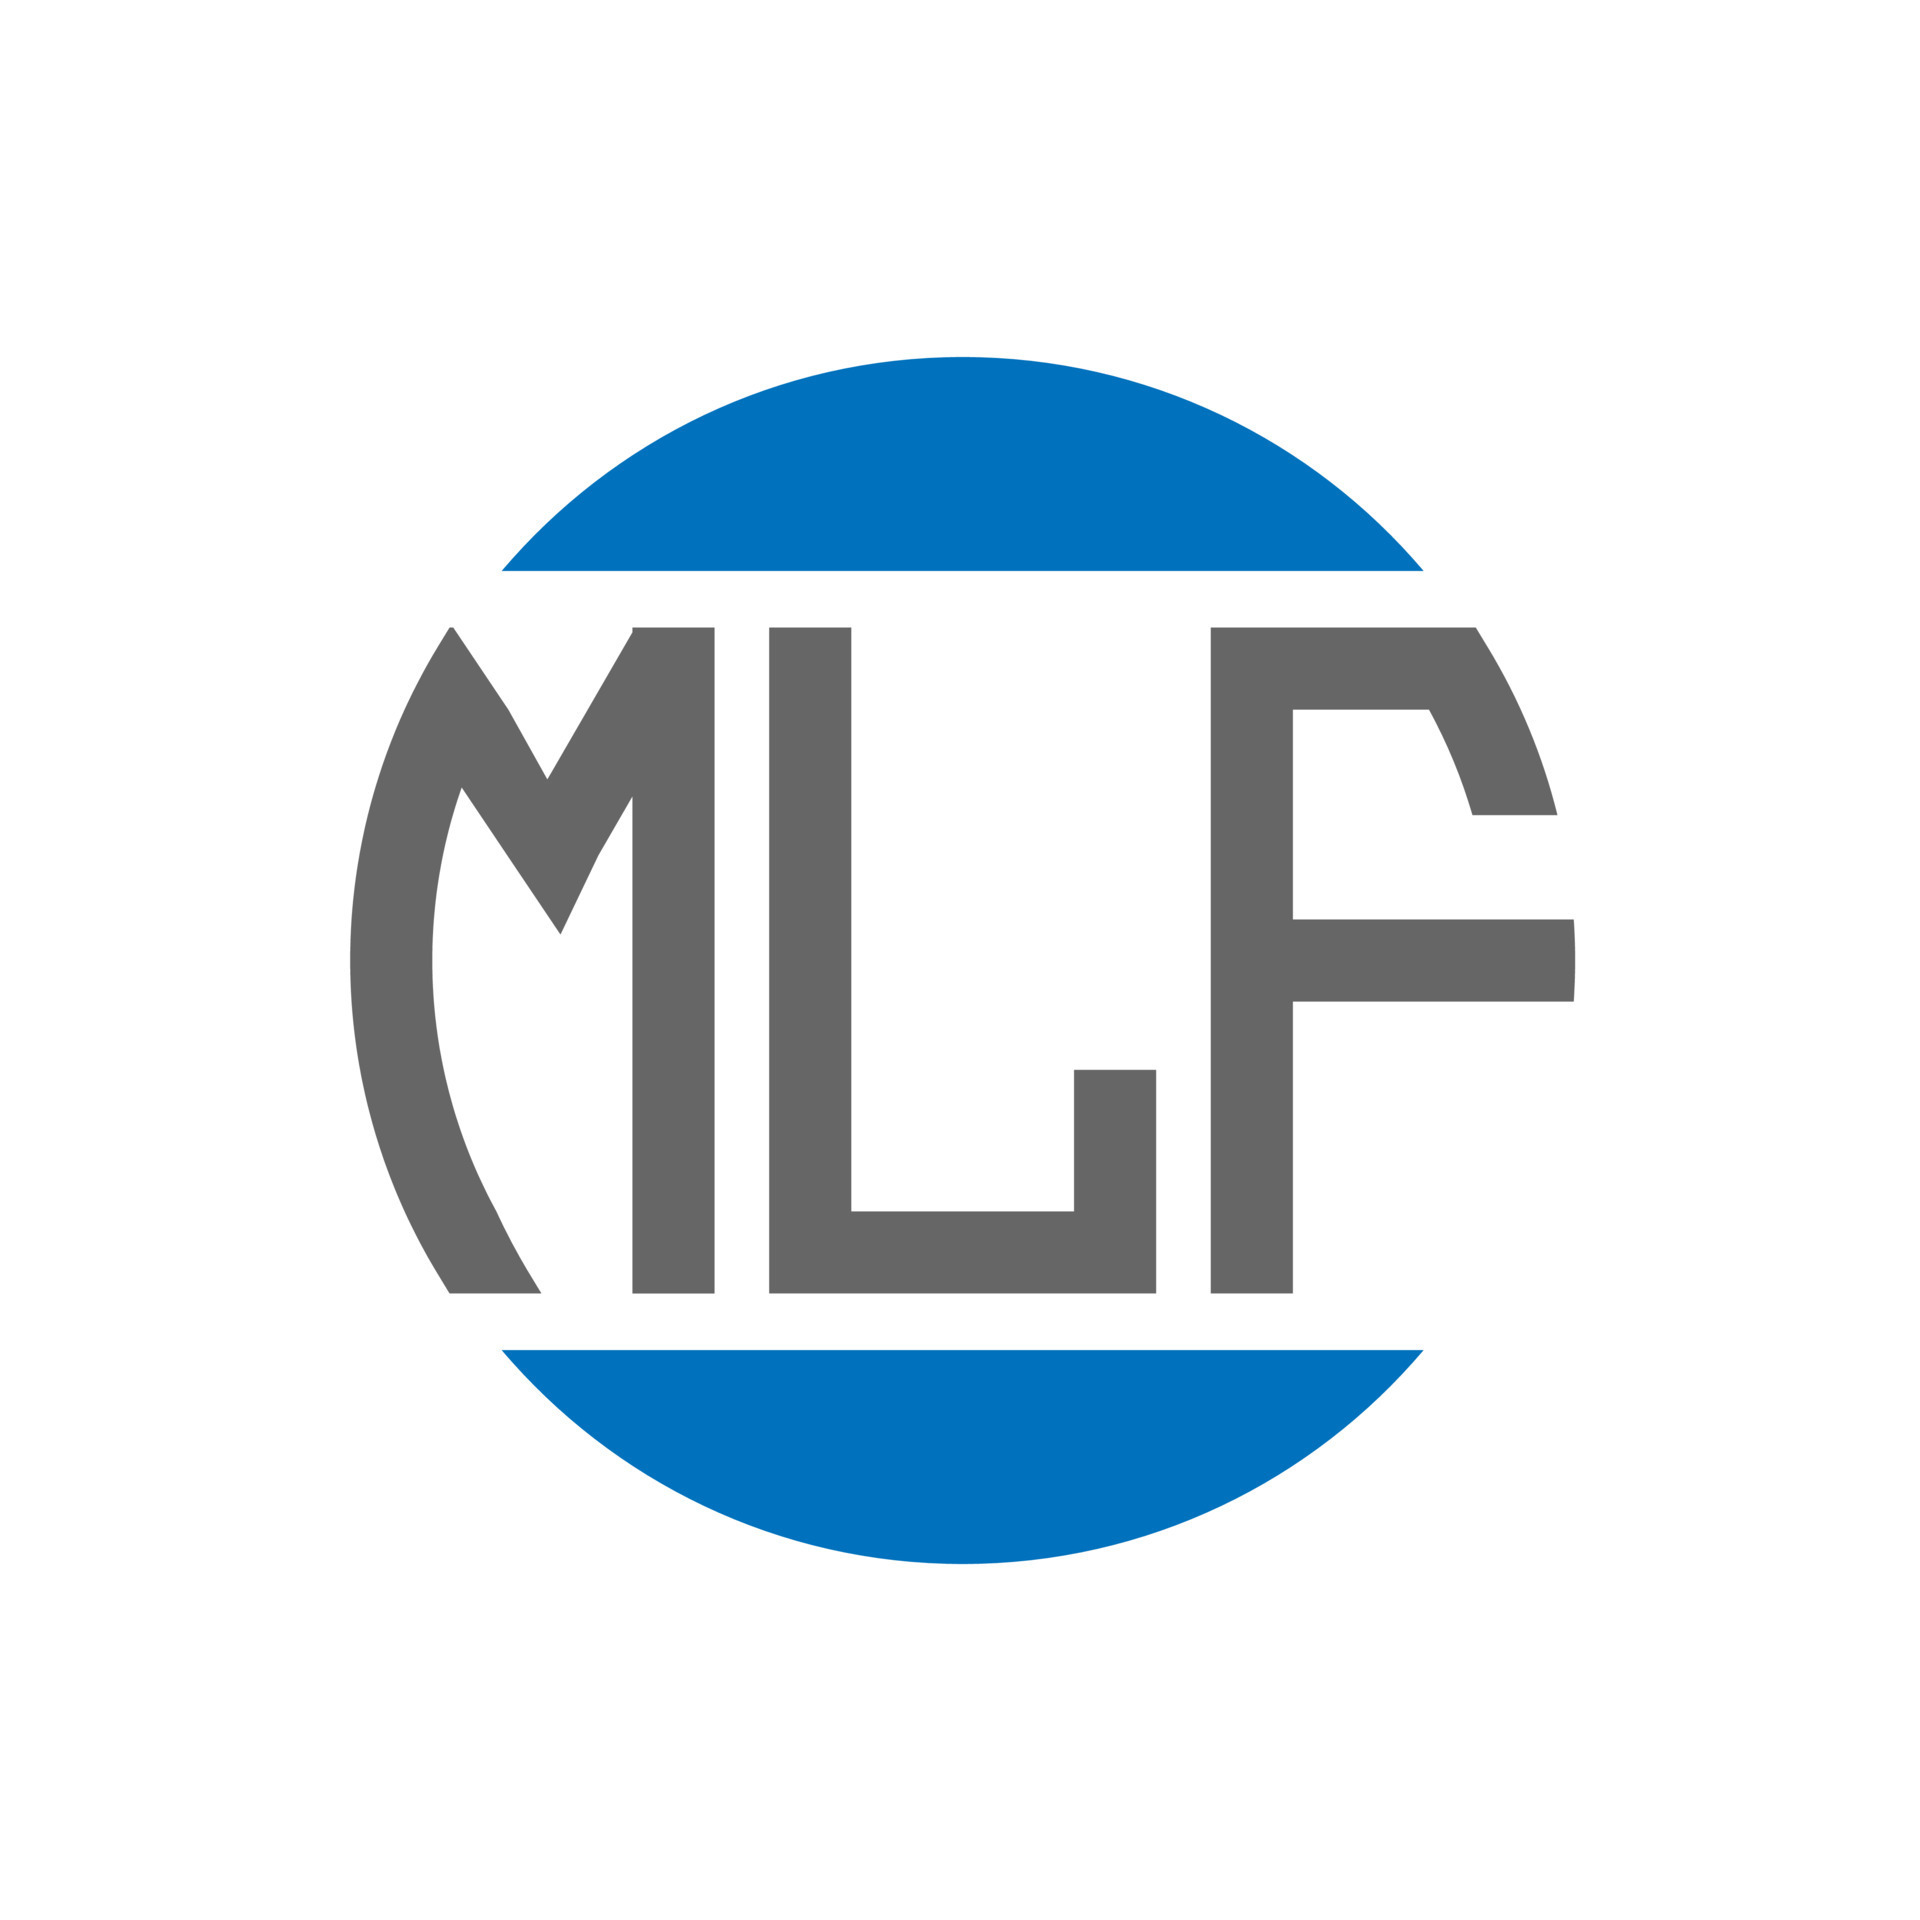 MLF letter logo design on white background. MLF creative initials